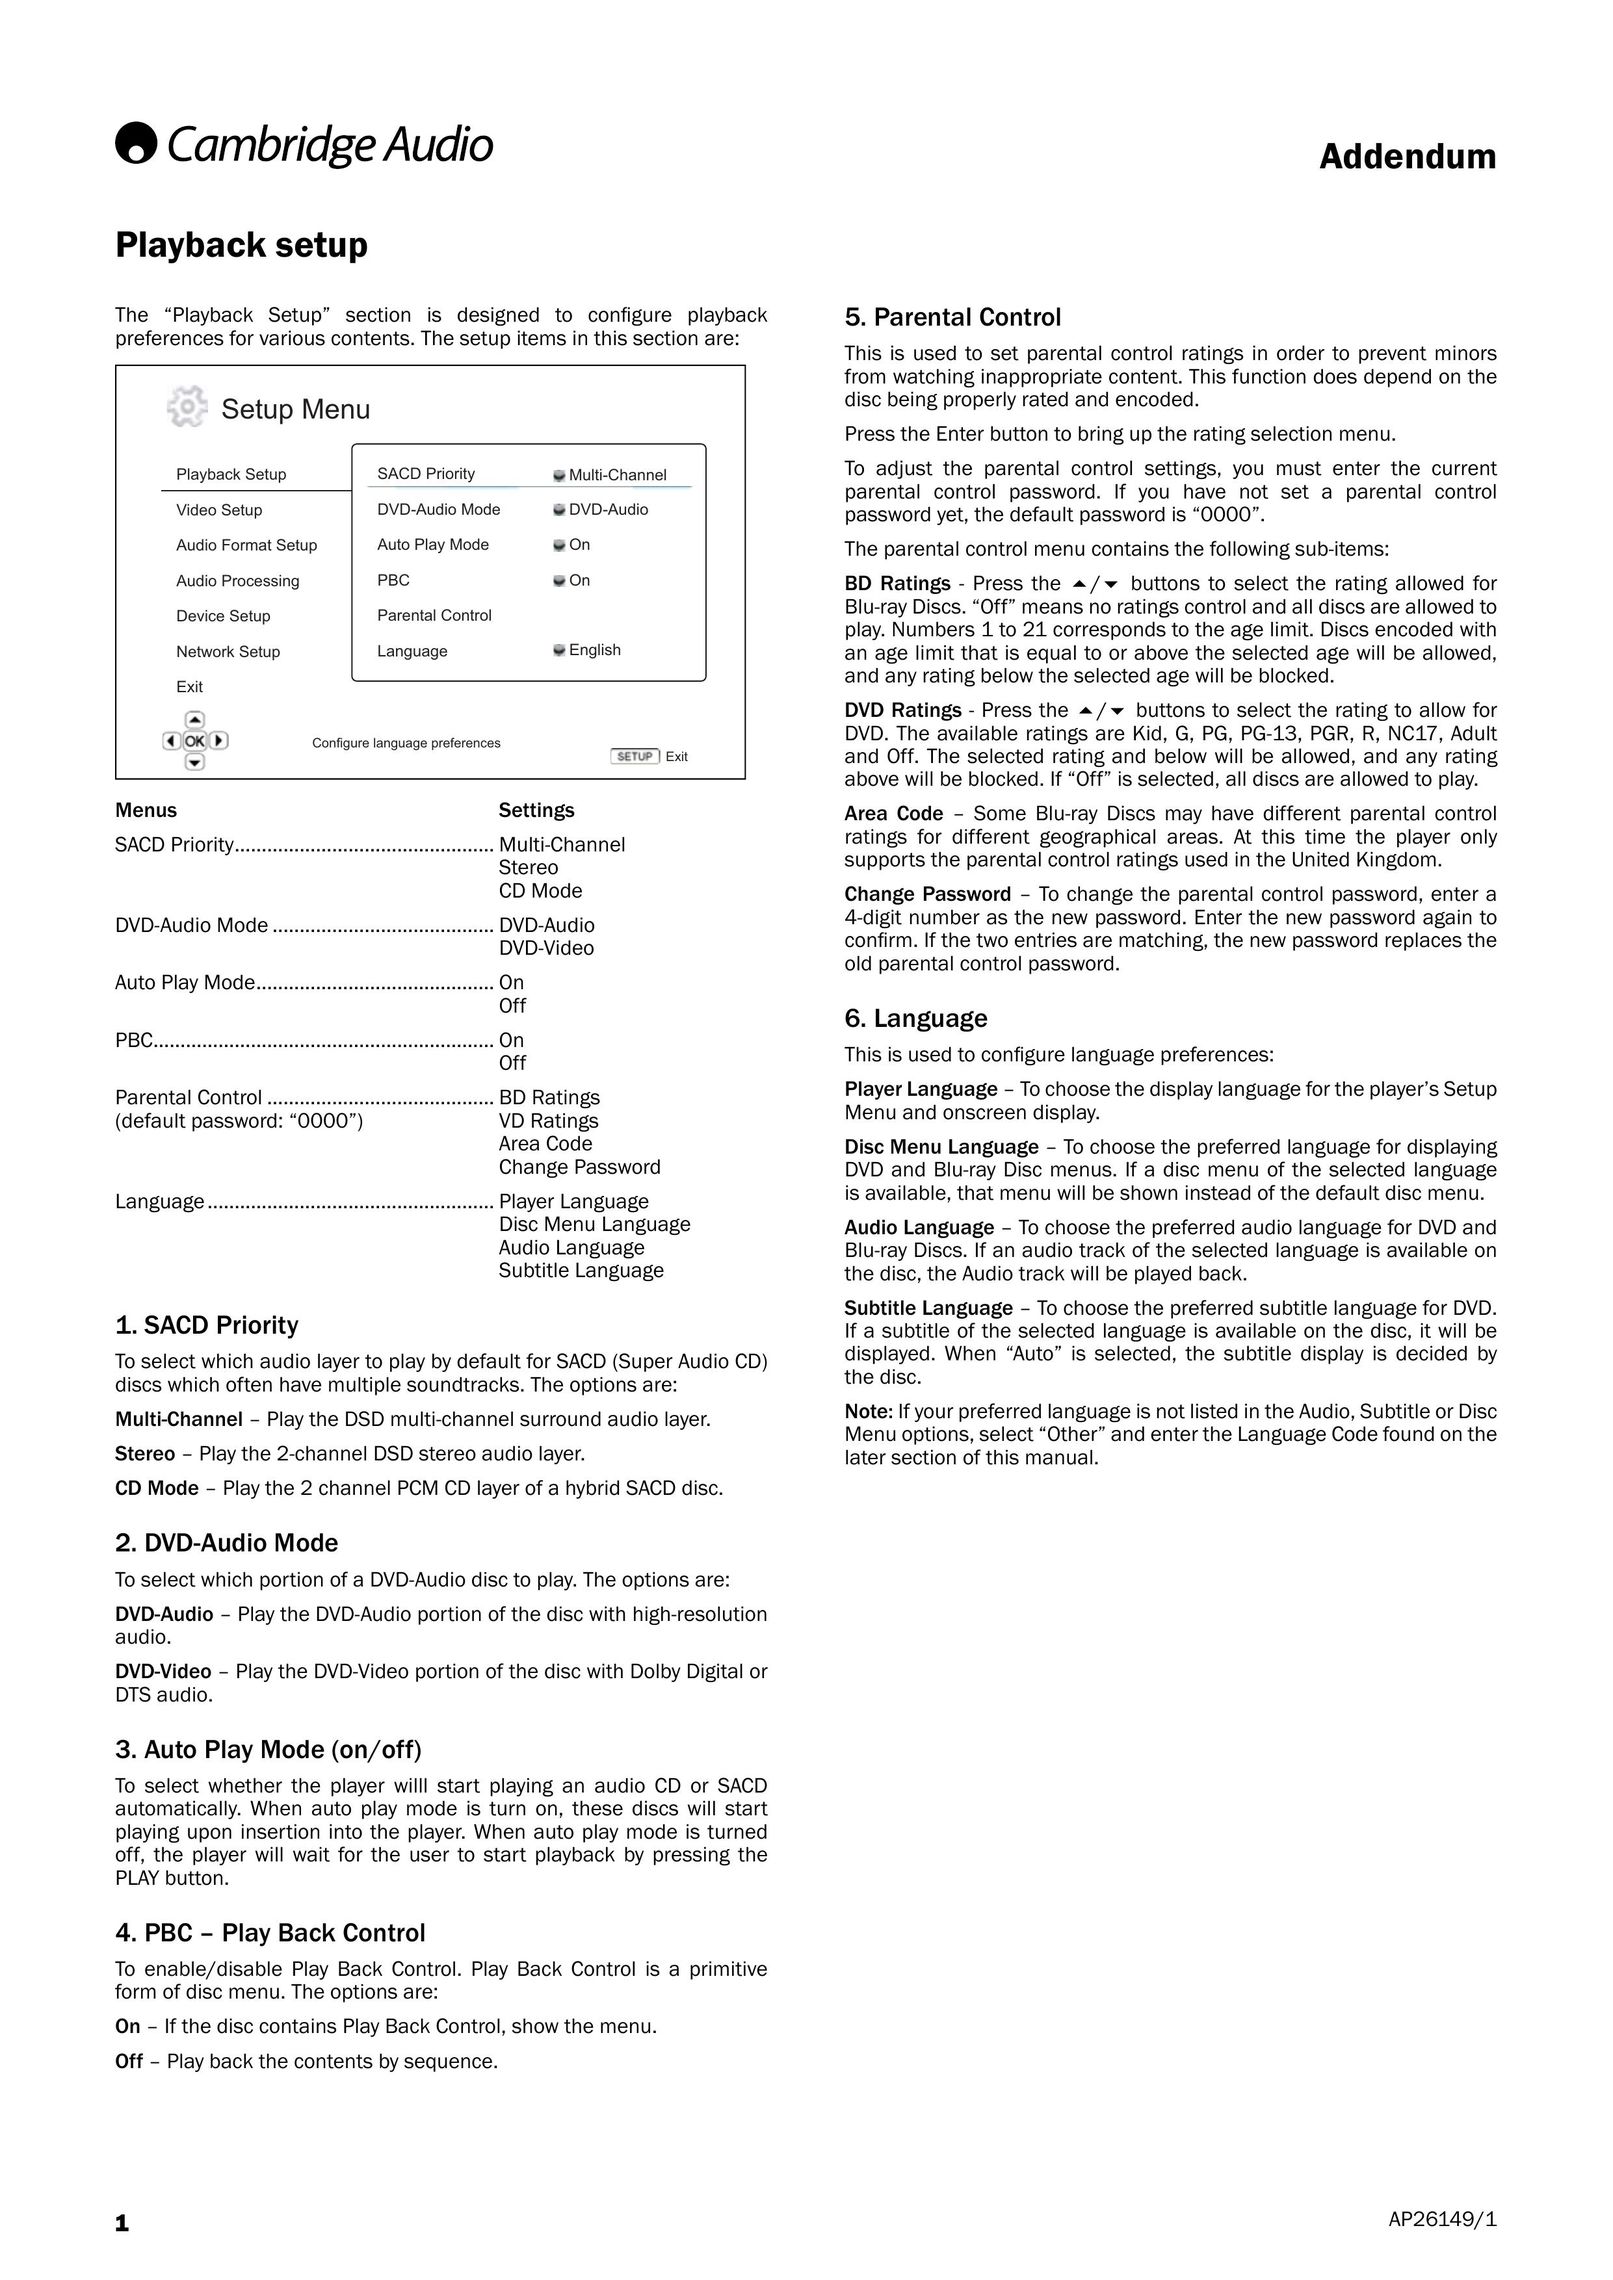 Cambridge Audio AP26149/1 Blu-ray Player User Manual